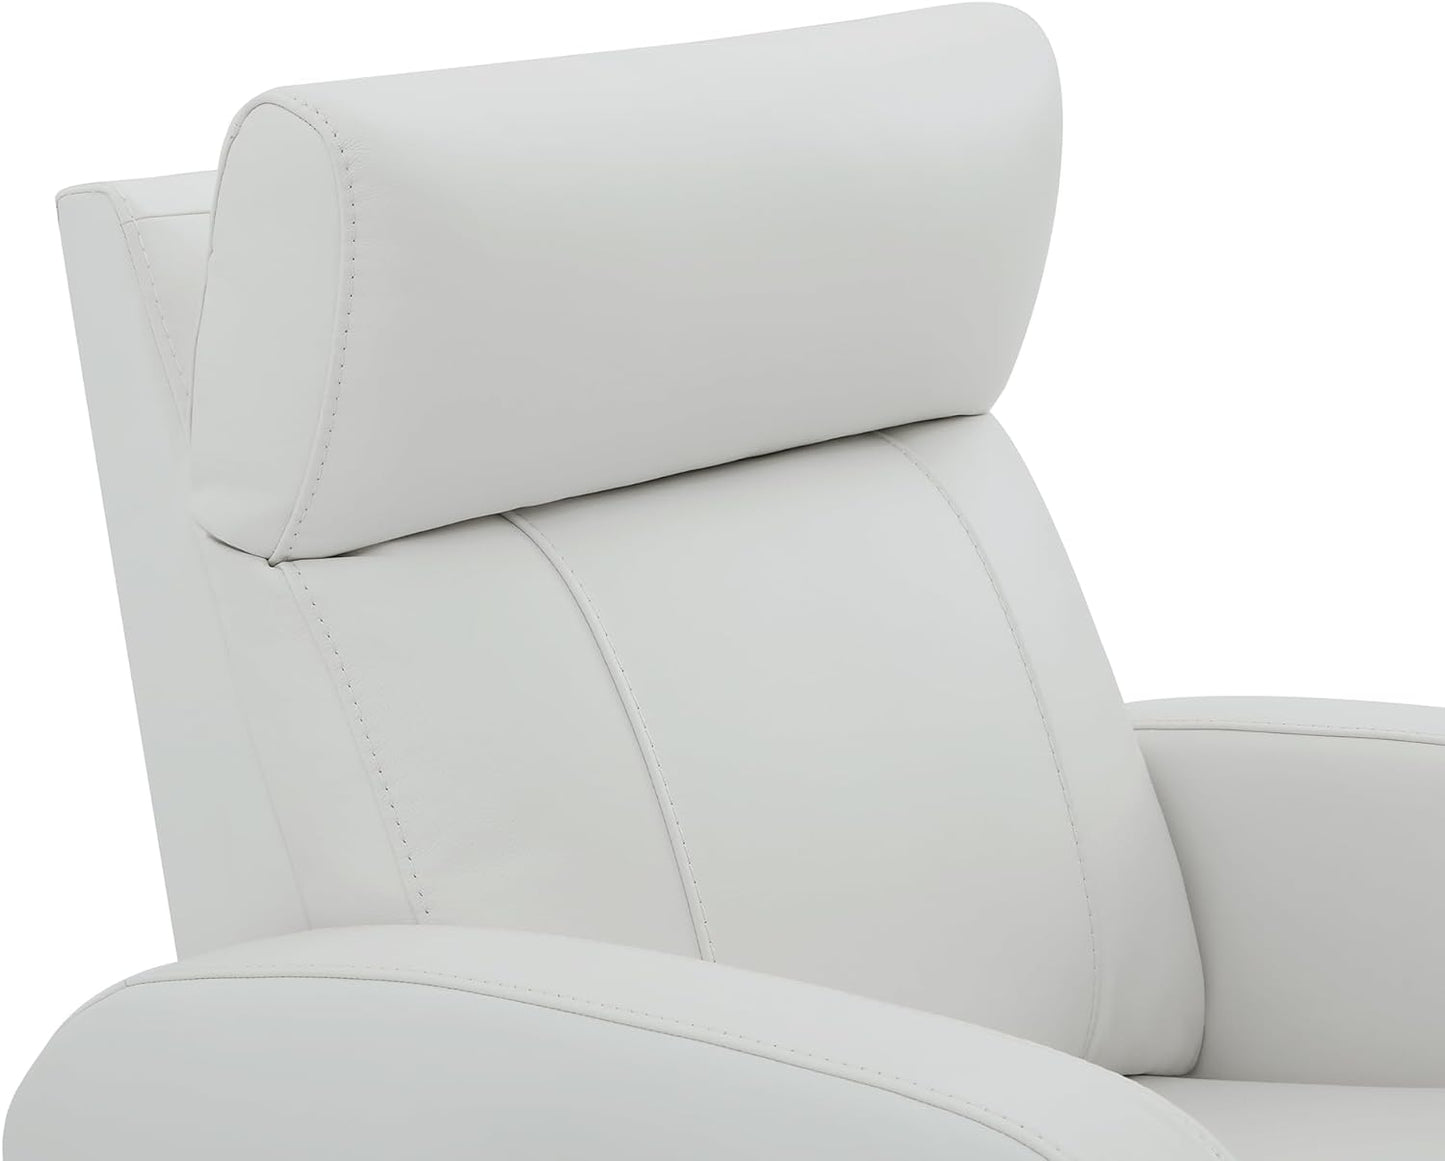 Recliner - CHITA Genuine Leather Power Swivel Glider Recliner Chair, Double Layer Backrest Truck Armrest Recliner Chair Sofa for Living Room-White